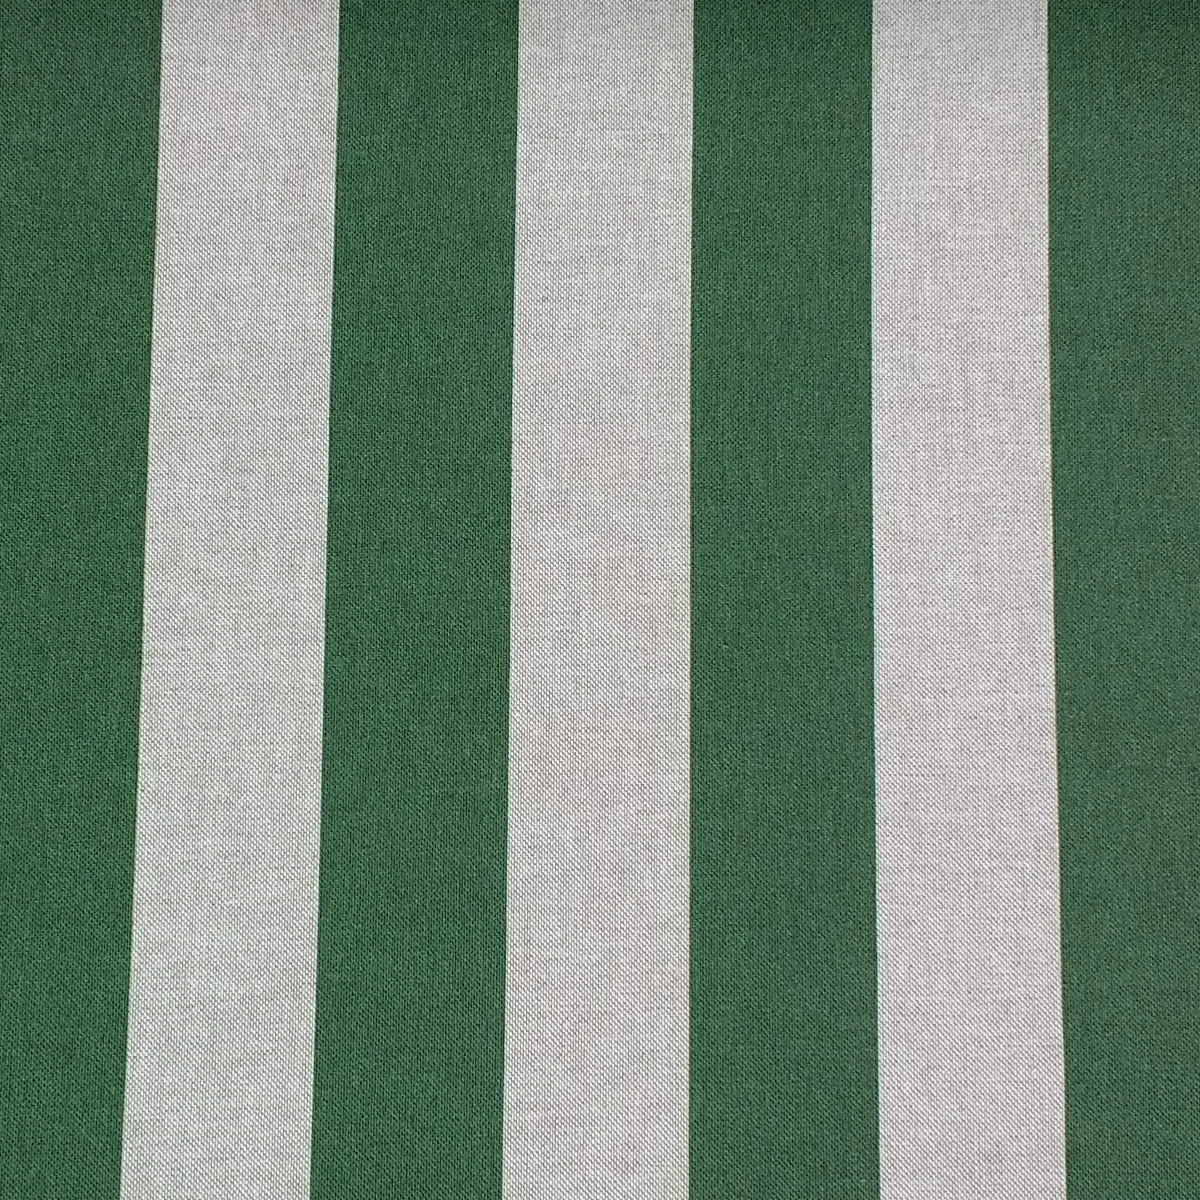 Striped Fabric, Natural Fabrics - Tinsmiths